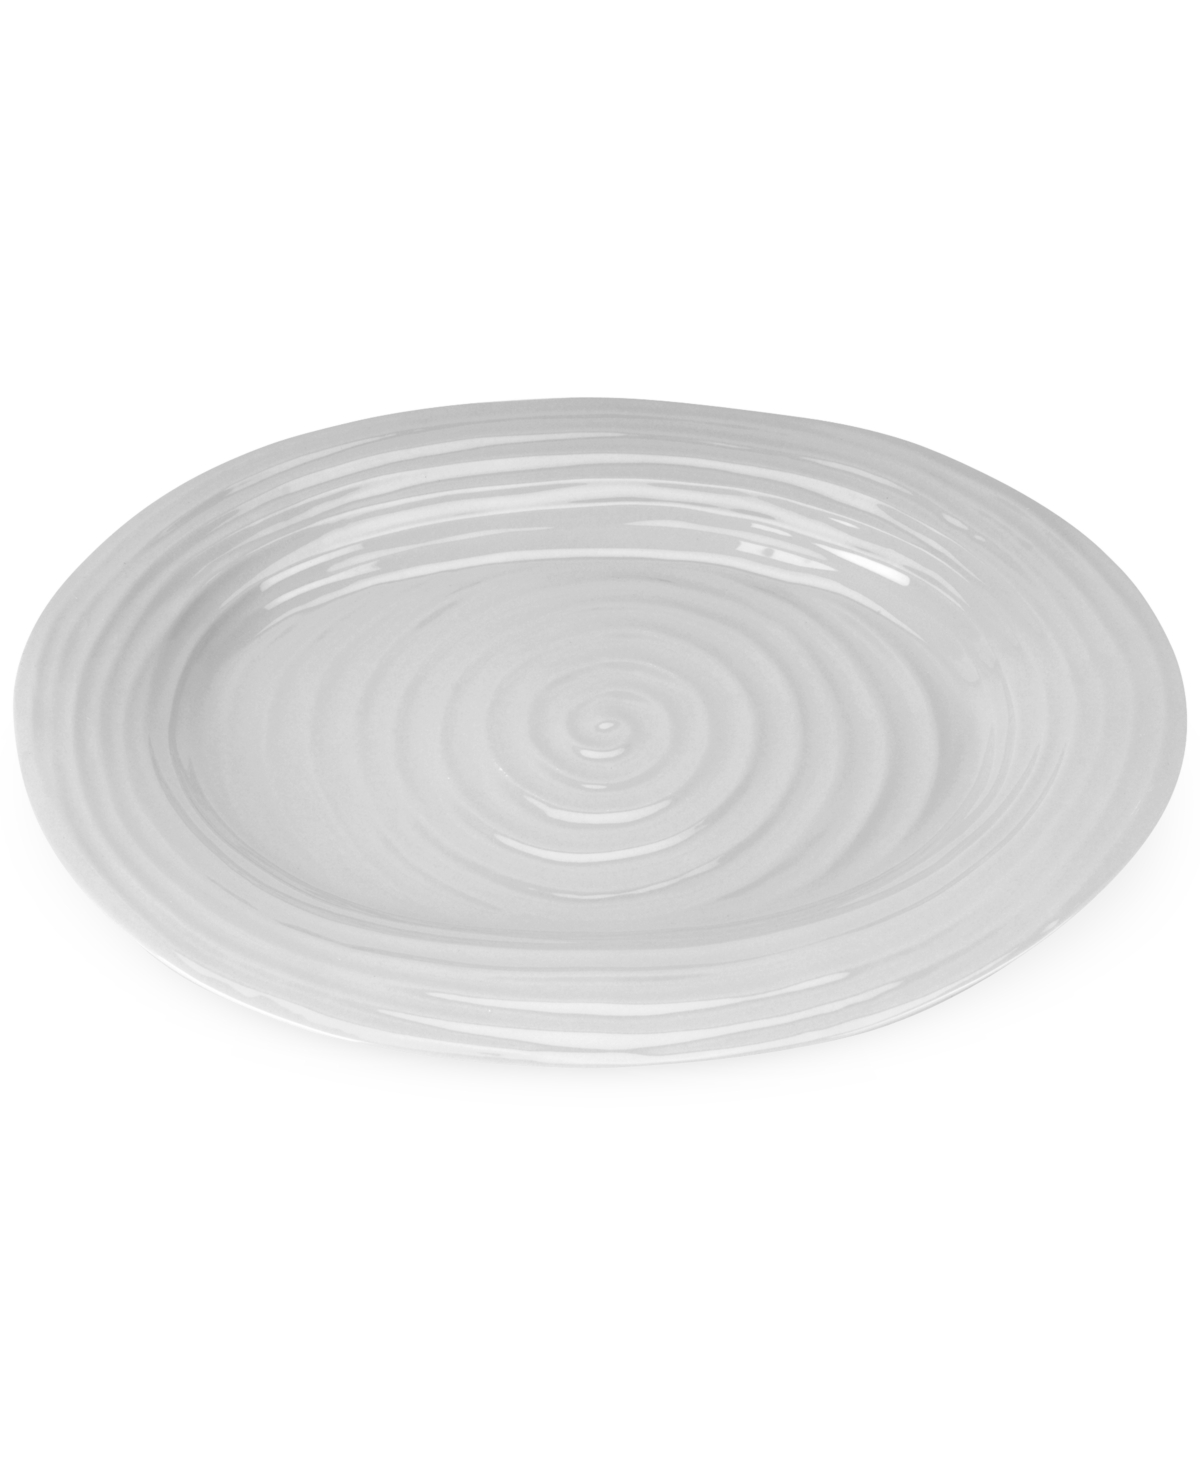 Portmeirion Sophie Conran Grey Medium Oval Platter In No Color